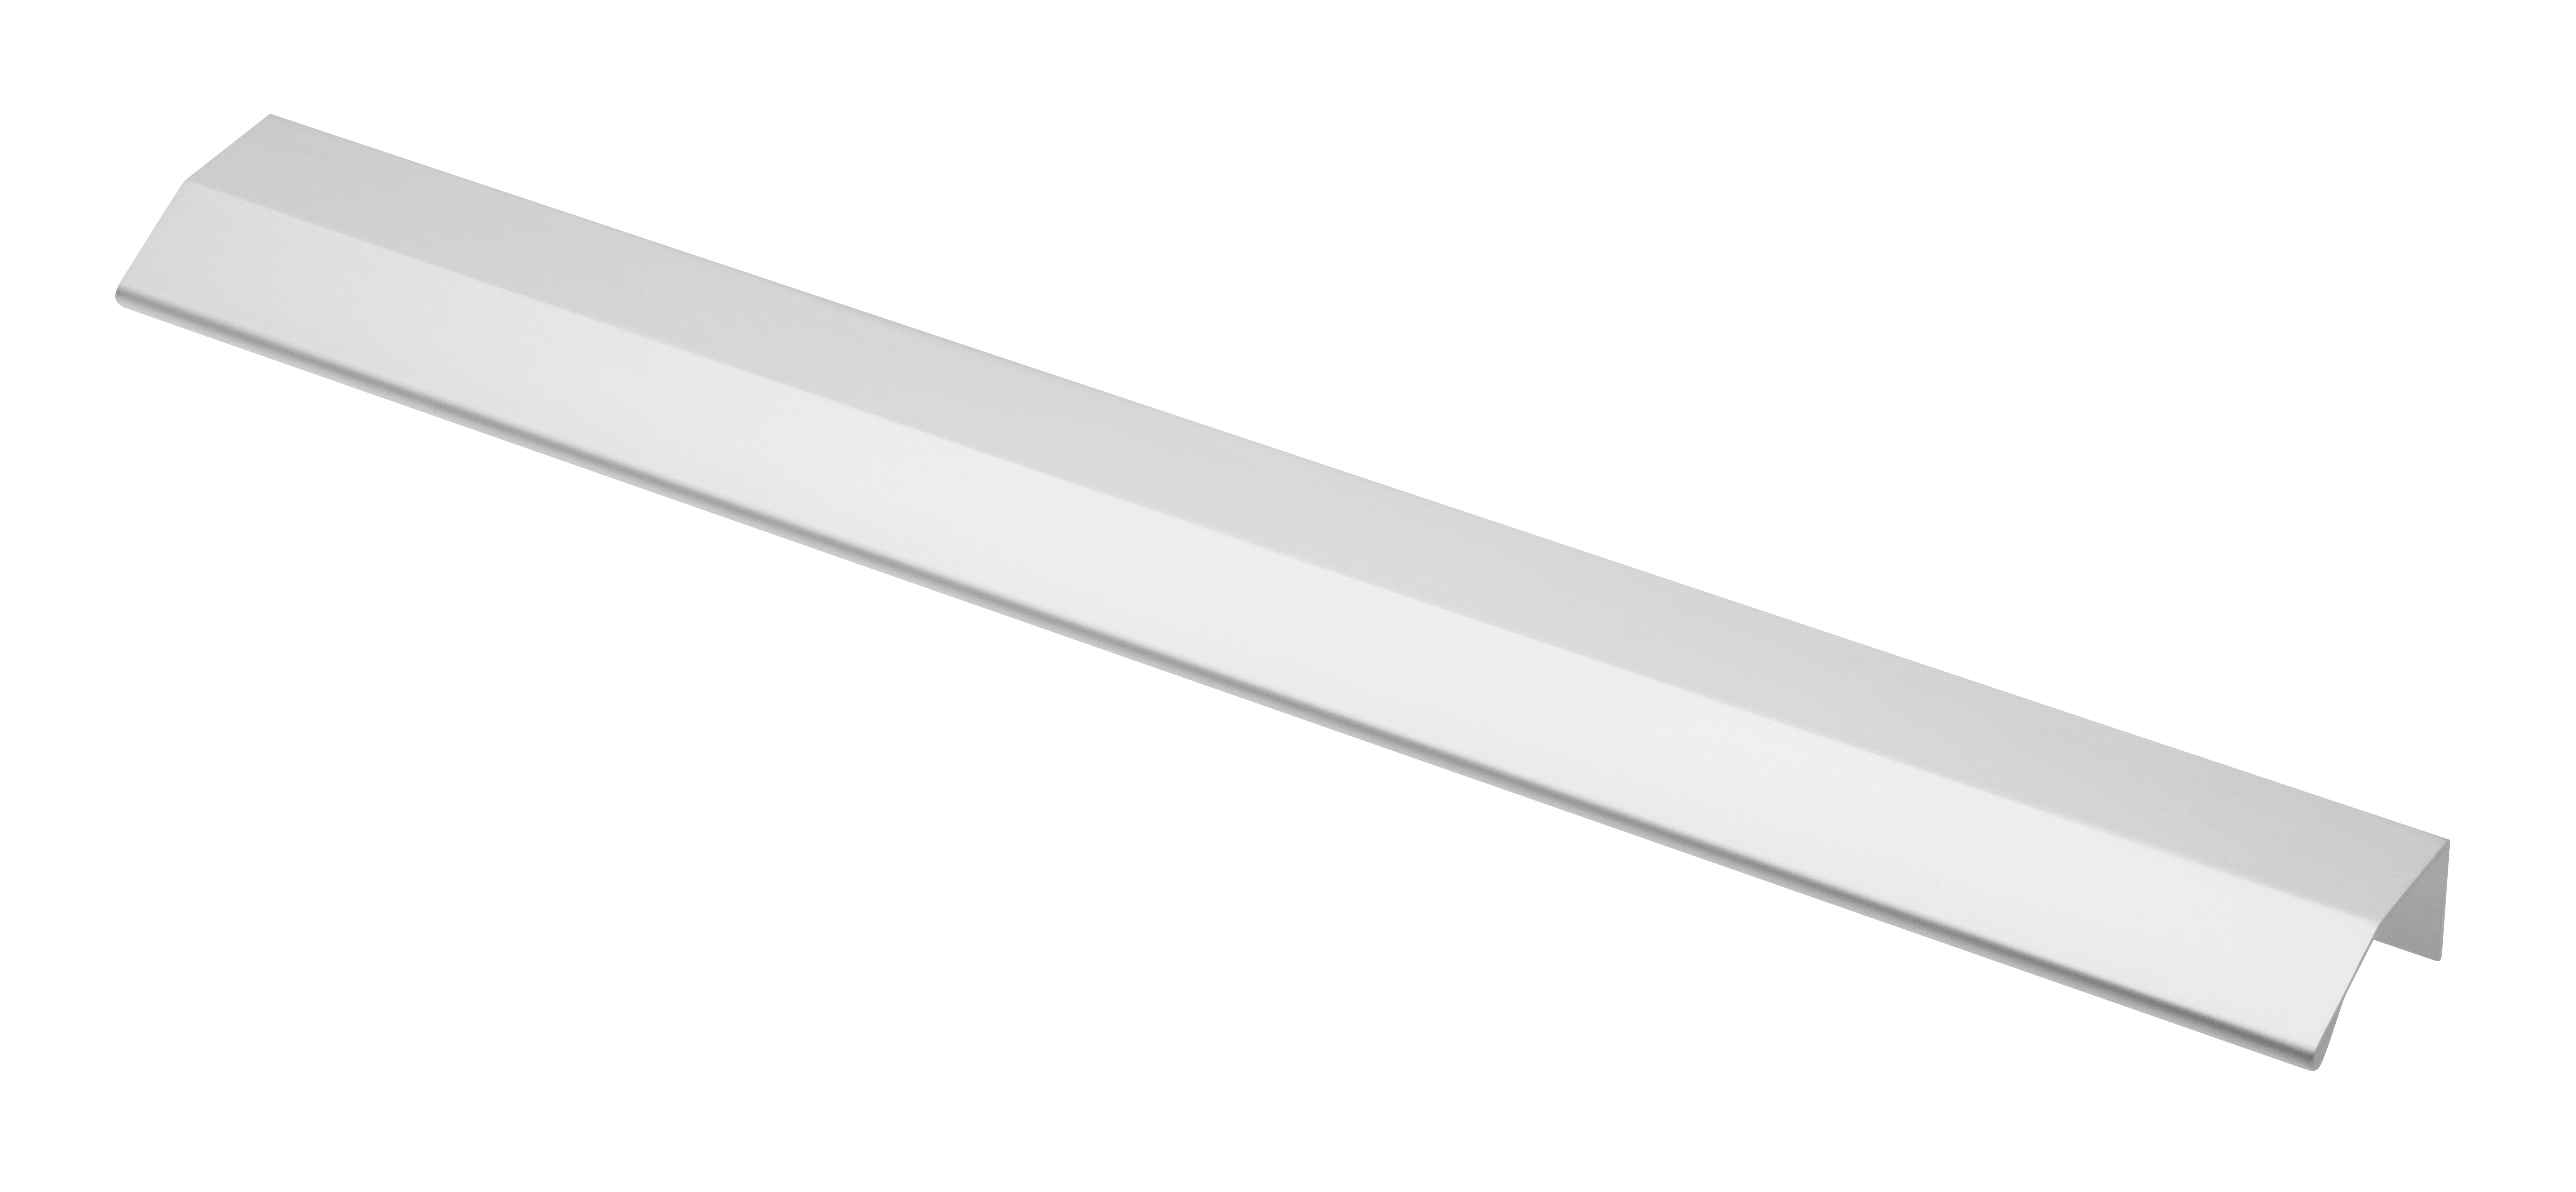 Ручка мебельная алюминиевая TREX L-3500 алюминий GTV 14378 - фото 1